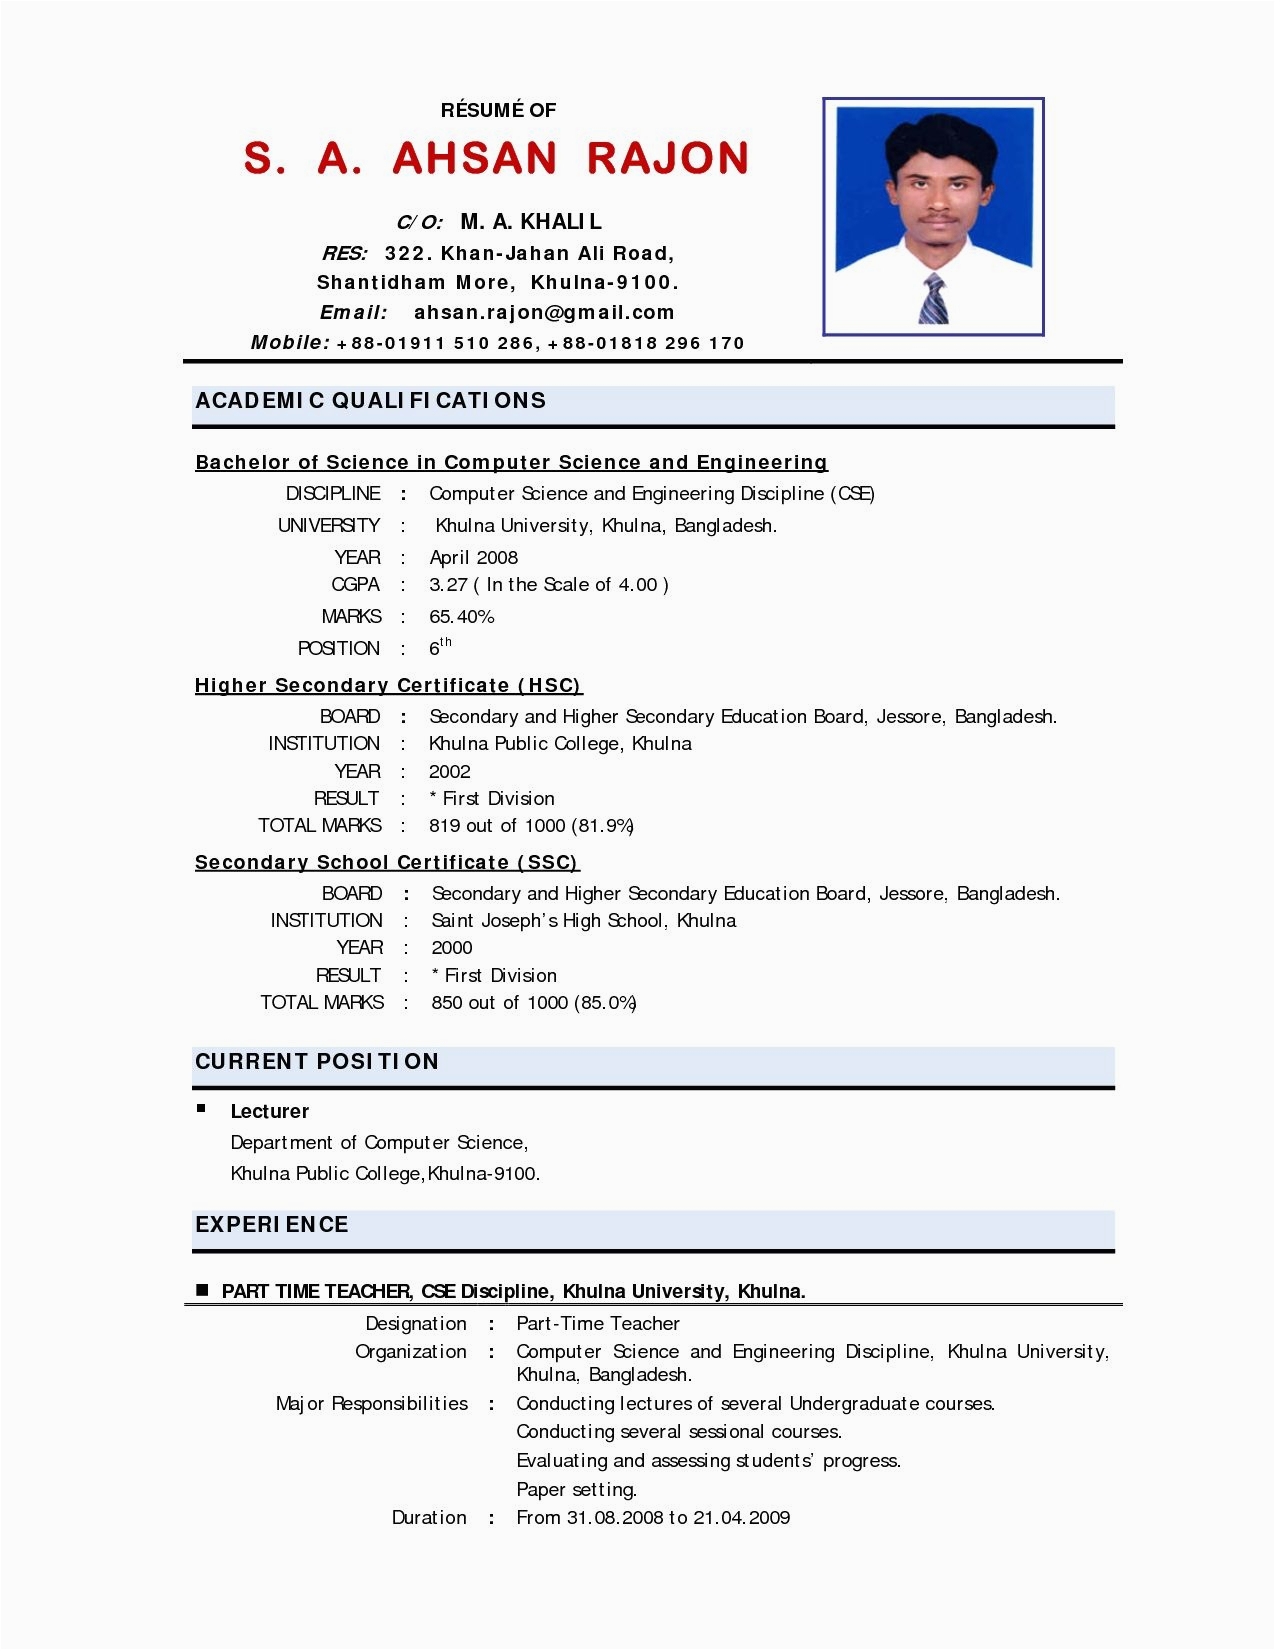 Sample Resume for Computer Science Teacher In India Resume format India Resume Templates